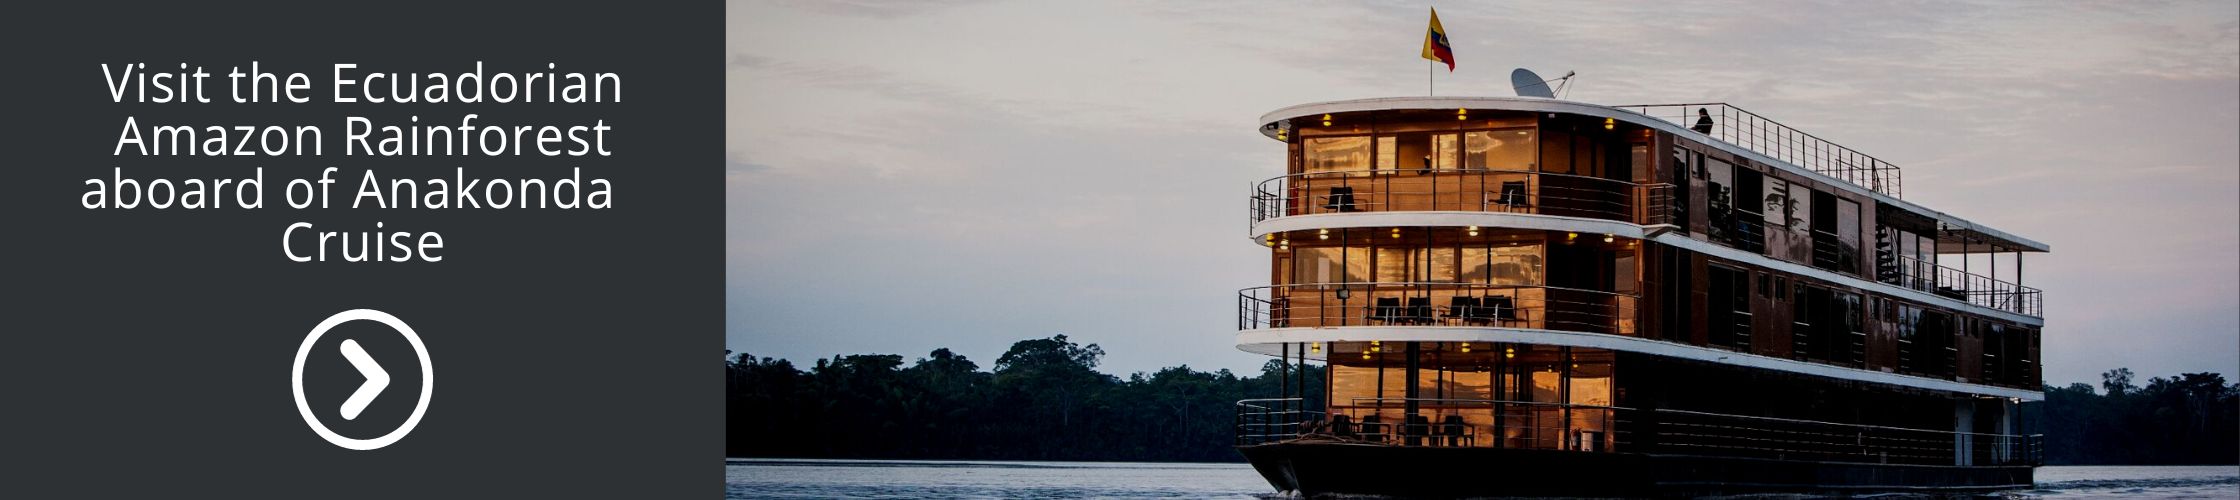 Visit the Ecuadorian Amazon Rainforest aboard of Anakonda Cruise